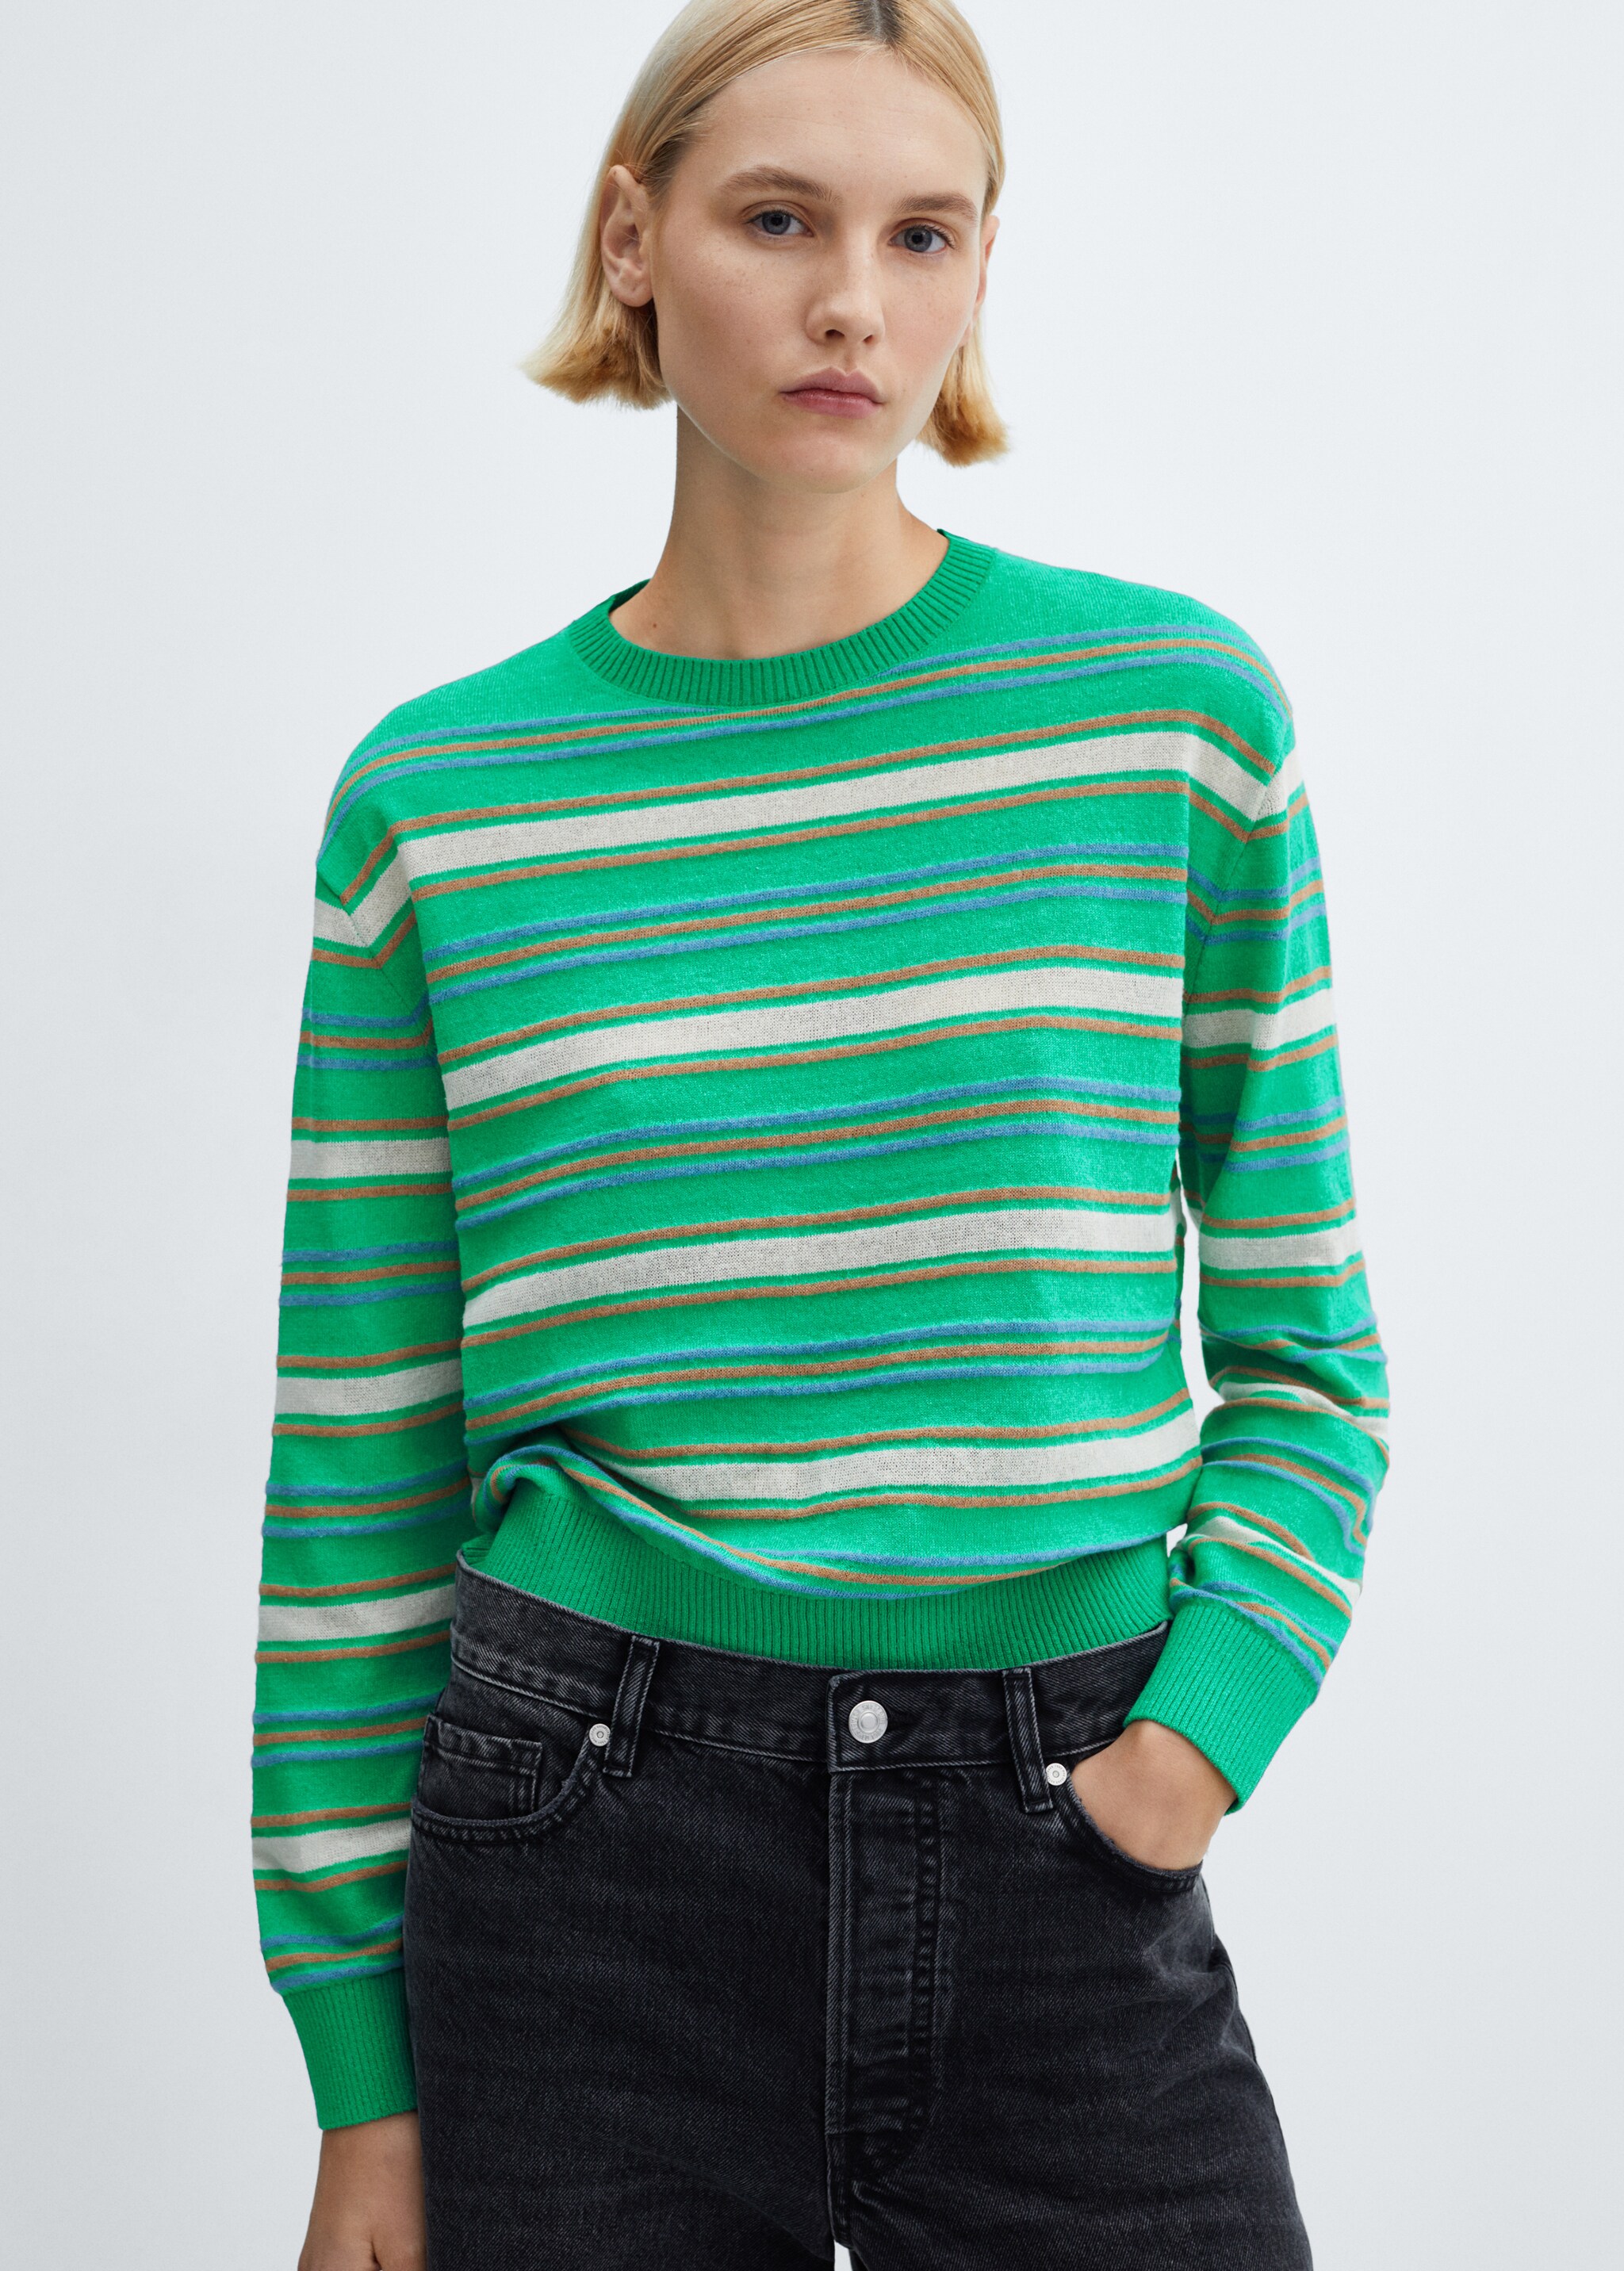 Round-neck striped sweater - Medium plane